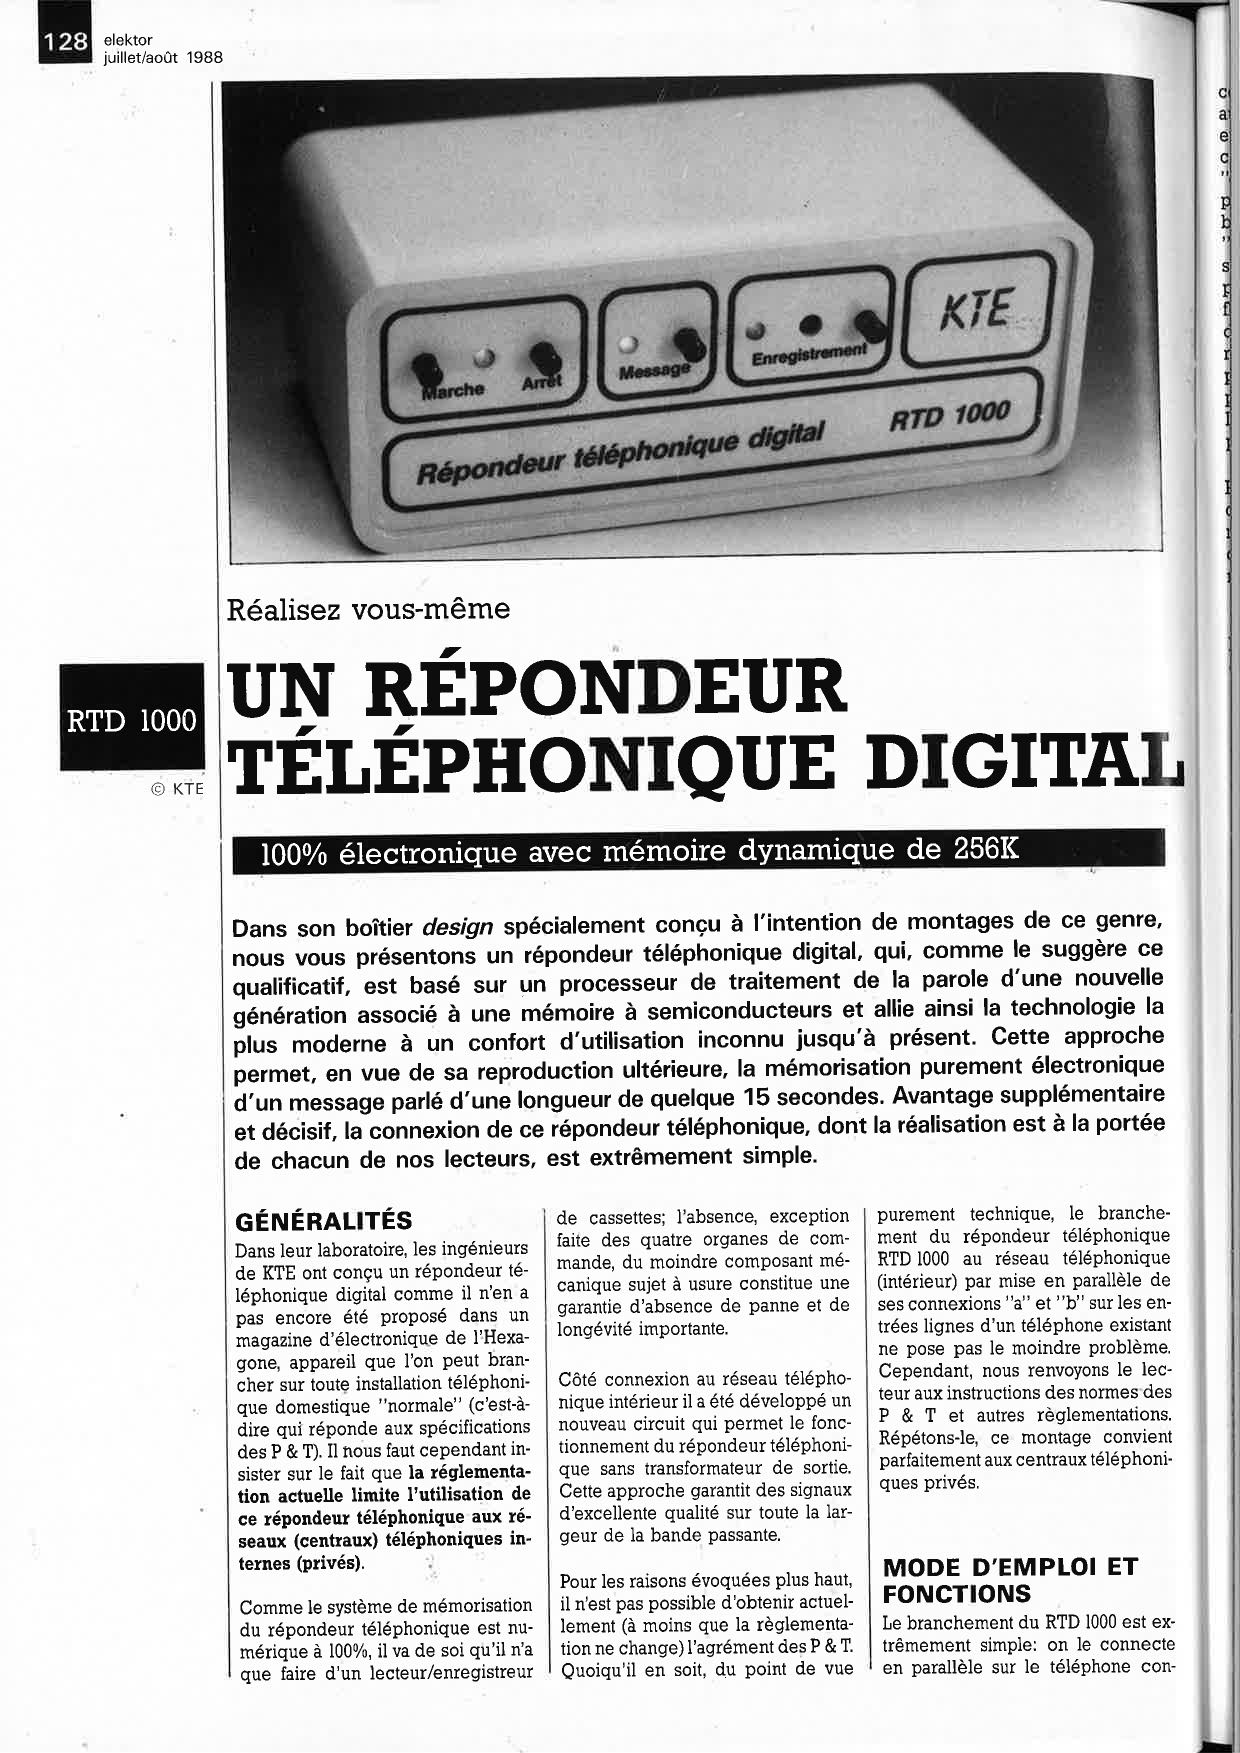 RTD1000: UN REPONDEUR TELEPHONIQUE DIGITAL